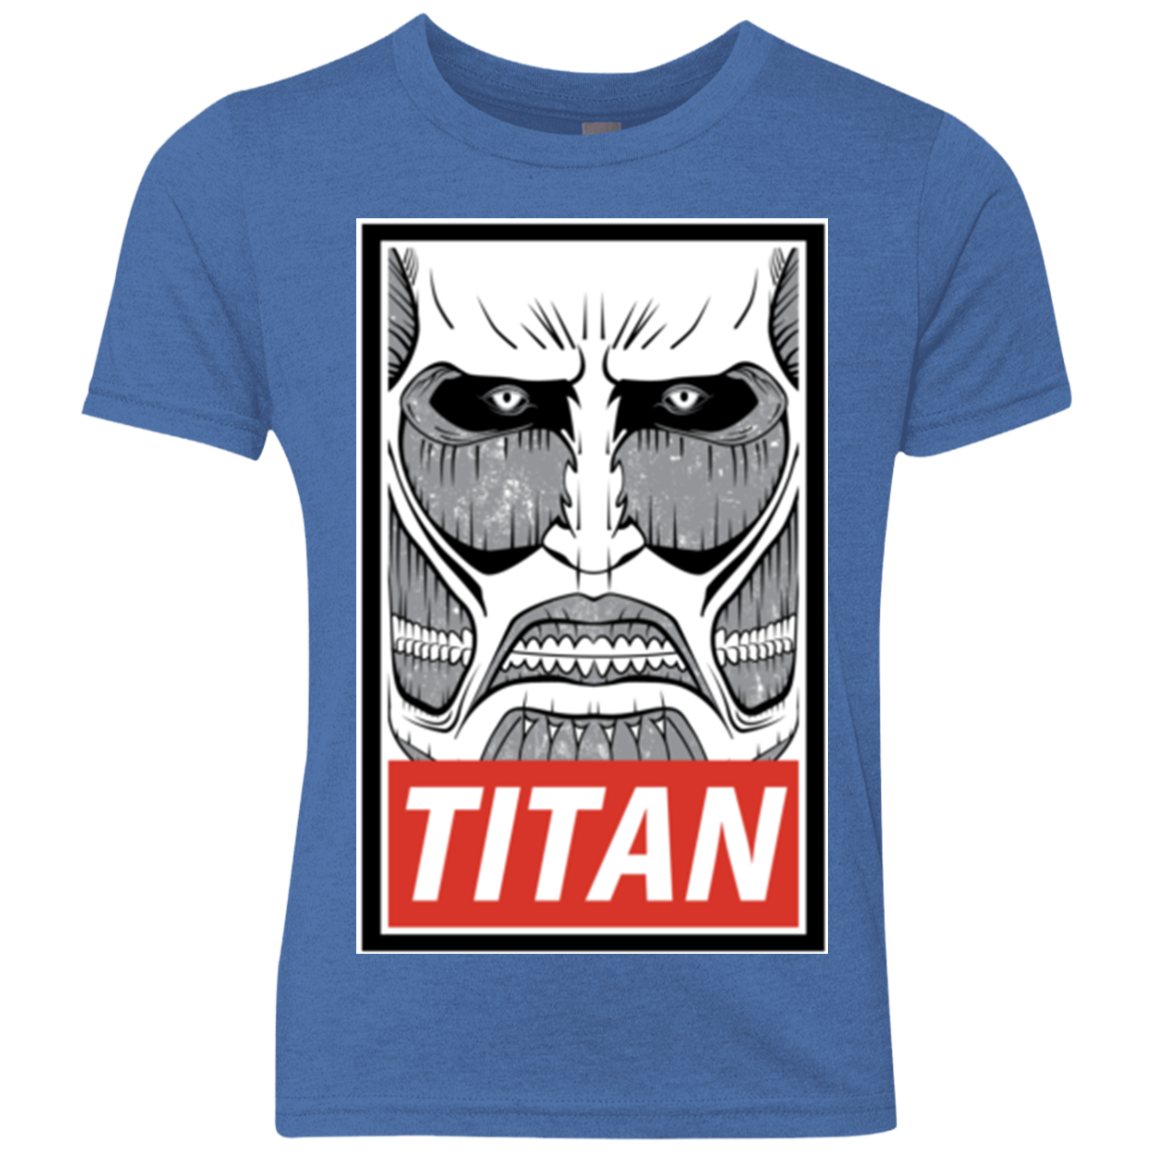 Titan Youth Triblend T-Shirt